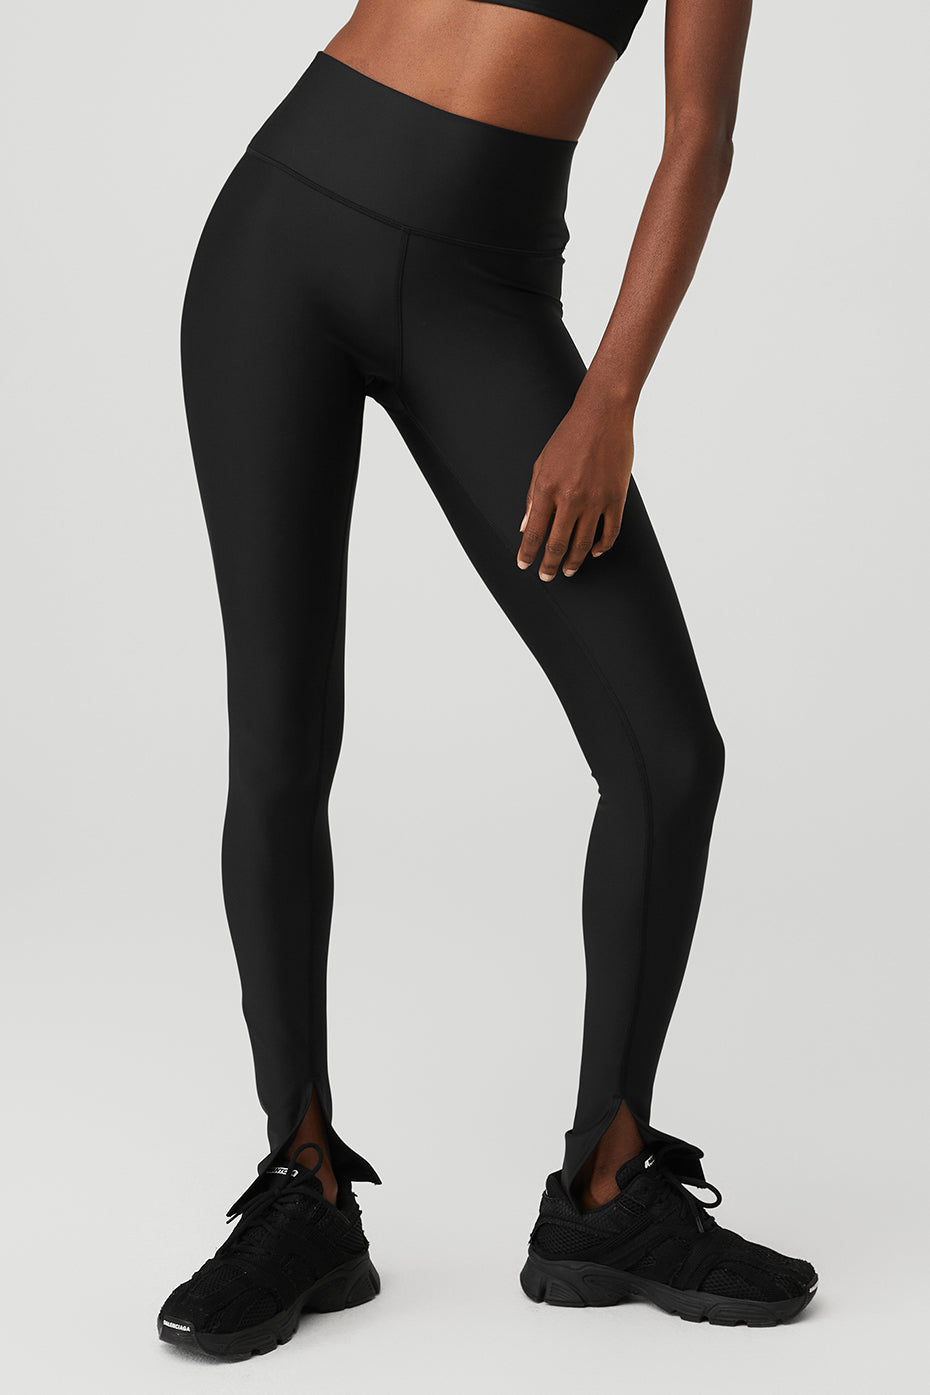 ALO Women's Size S - Black Ripped Leggings Waist Compression Skinny Full  Length